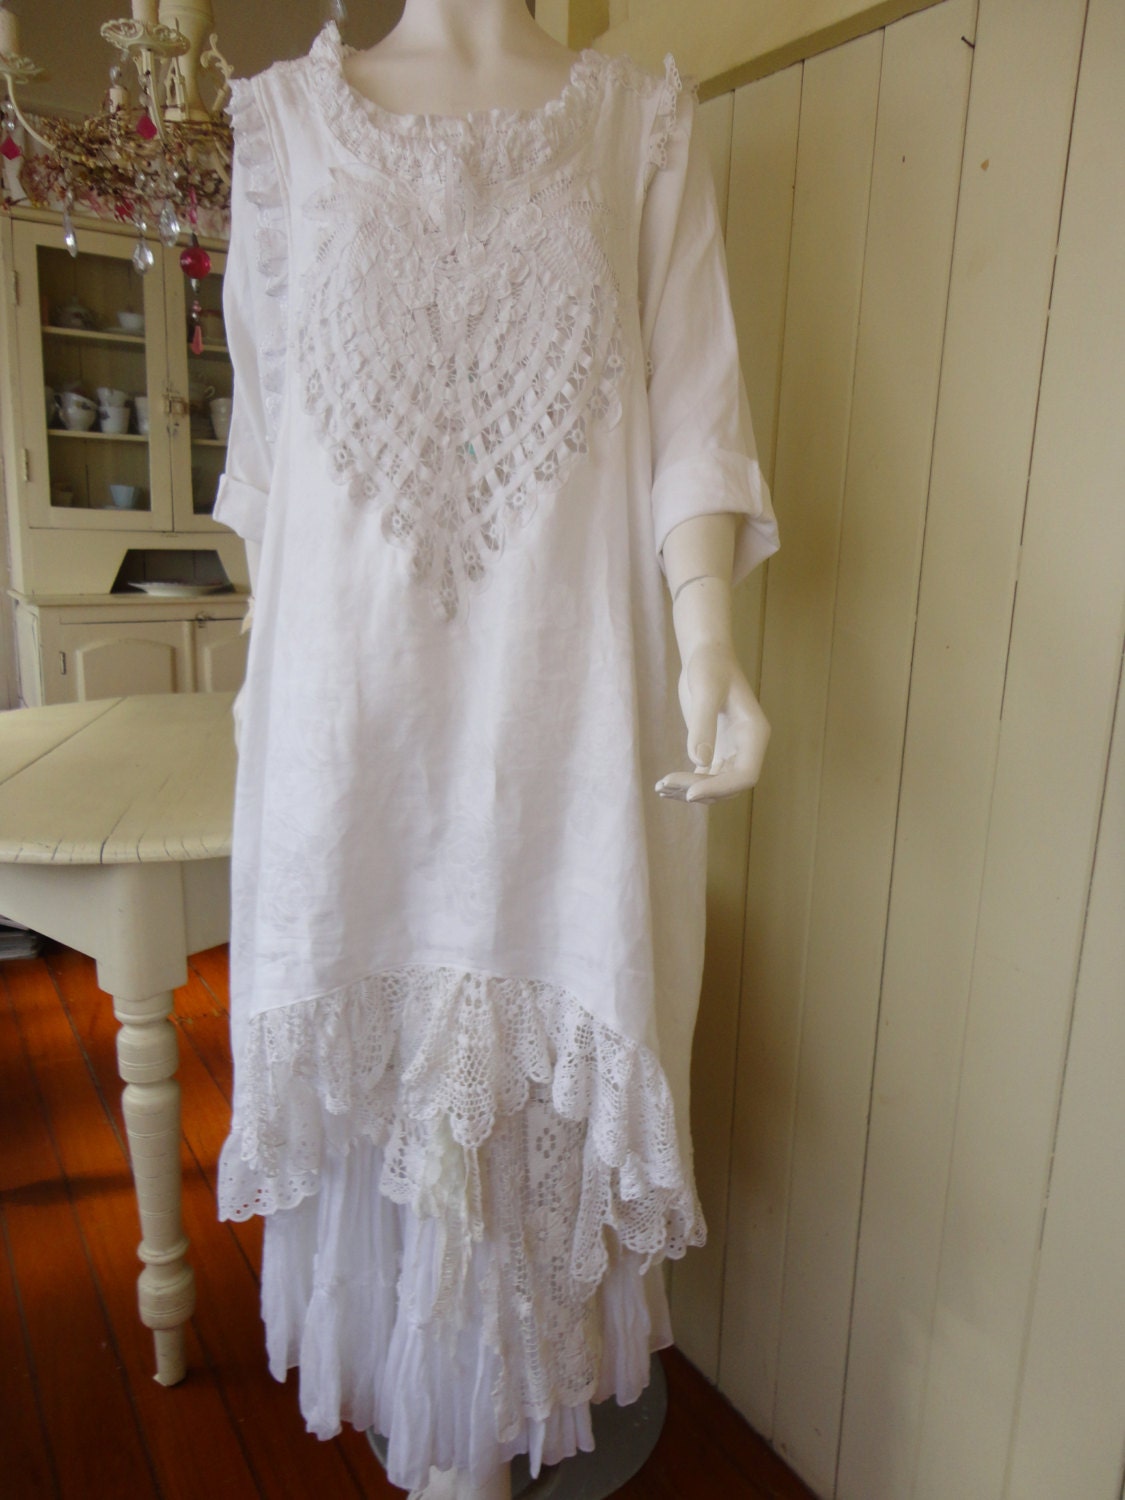 Romantic White Apron Dress Plus Size Handmade by vintacci on Etsy